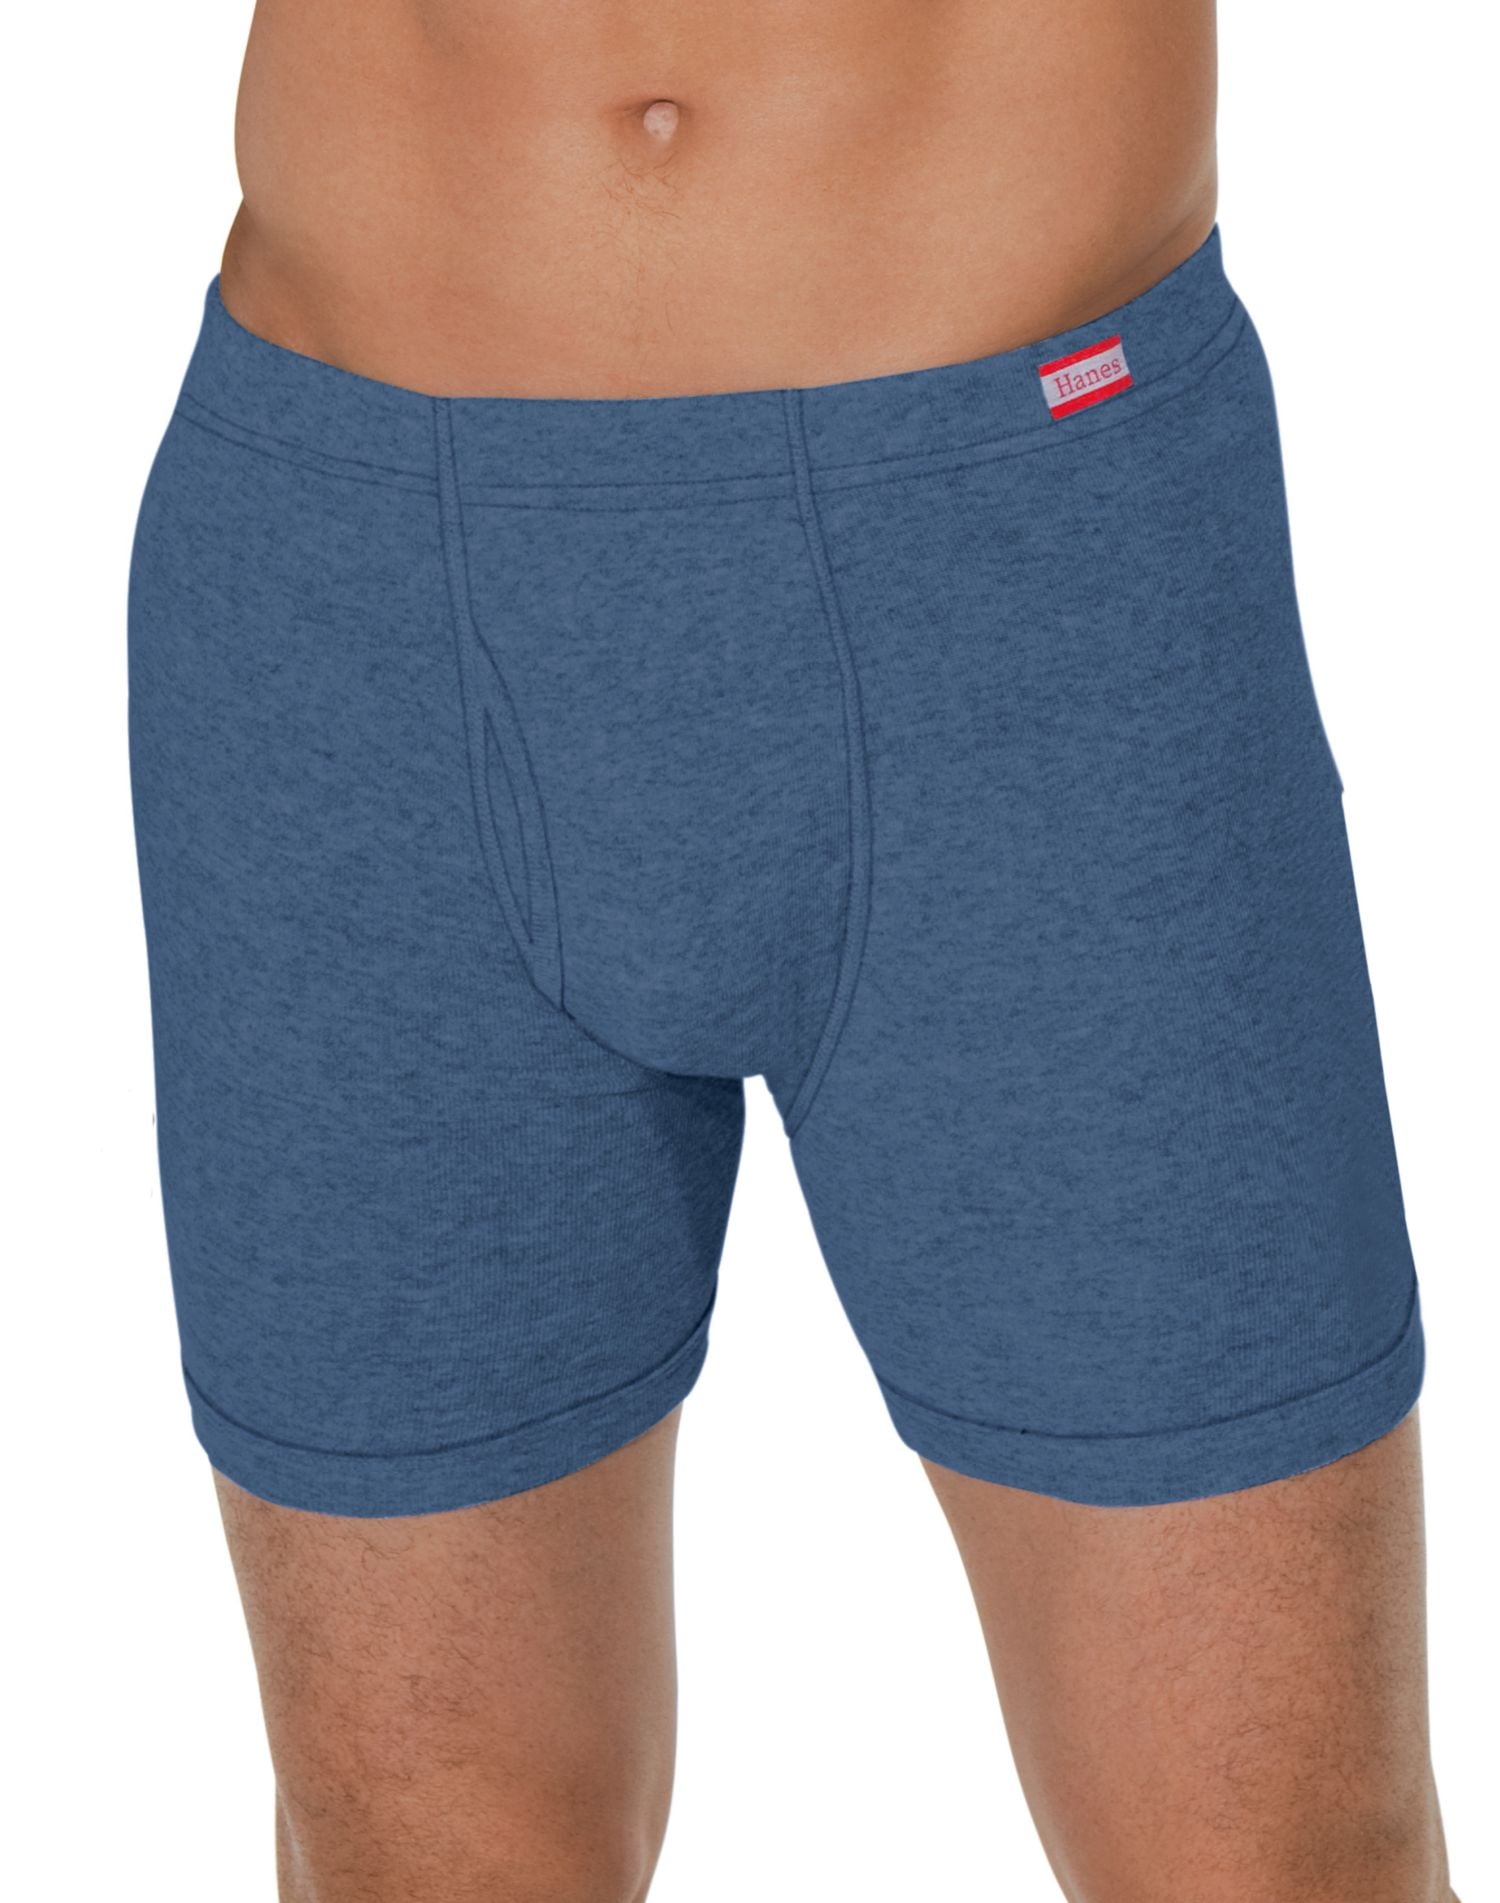 MODOQO Mens Underwear Regular Fit Ultimate Soft Cotton Boxer Brief 4-Pack